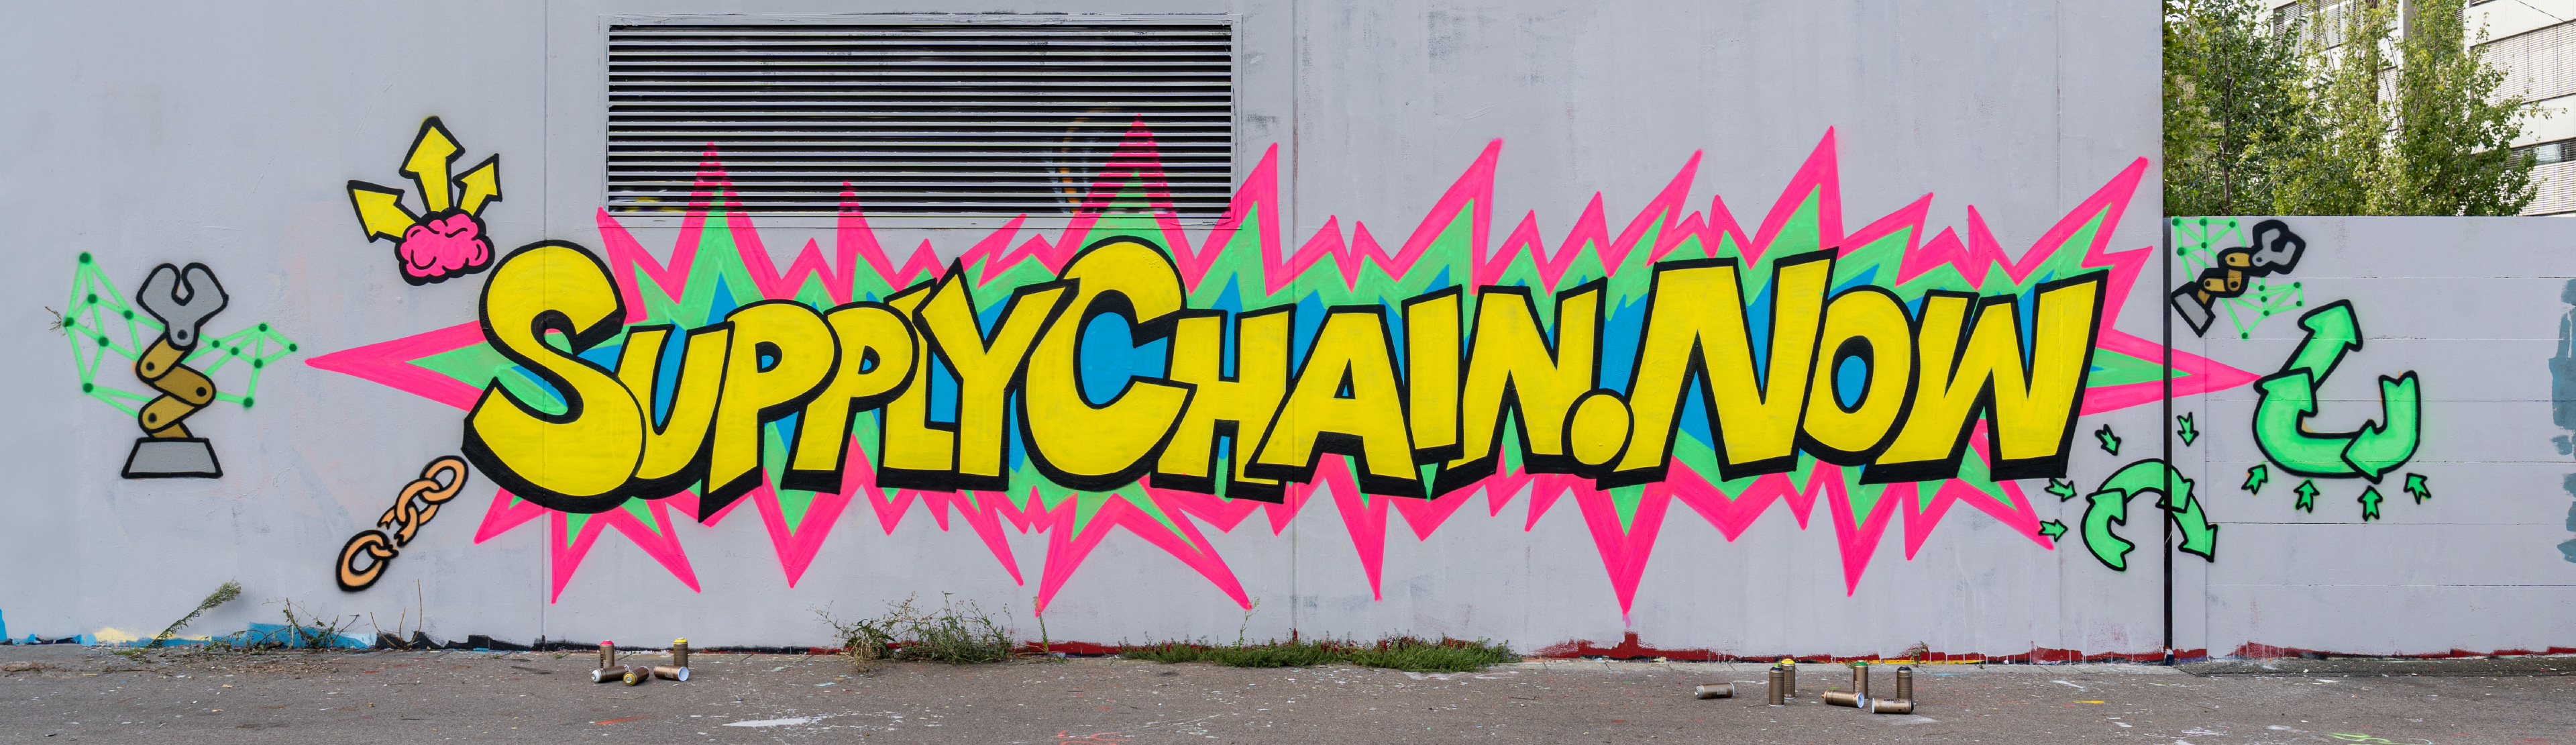 EY SupplyChain.NOW Graffiti